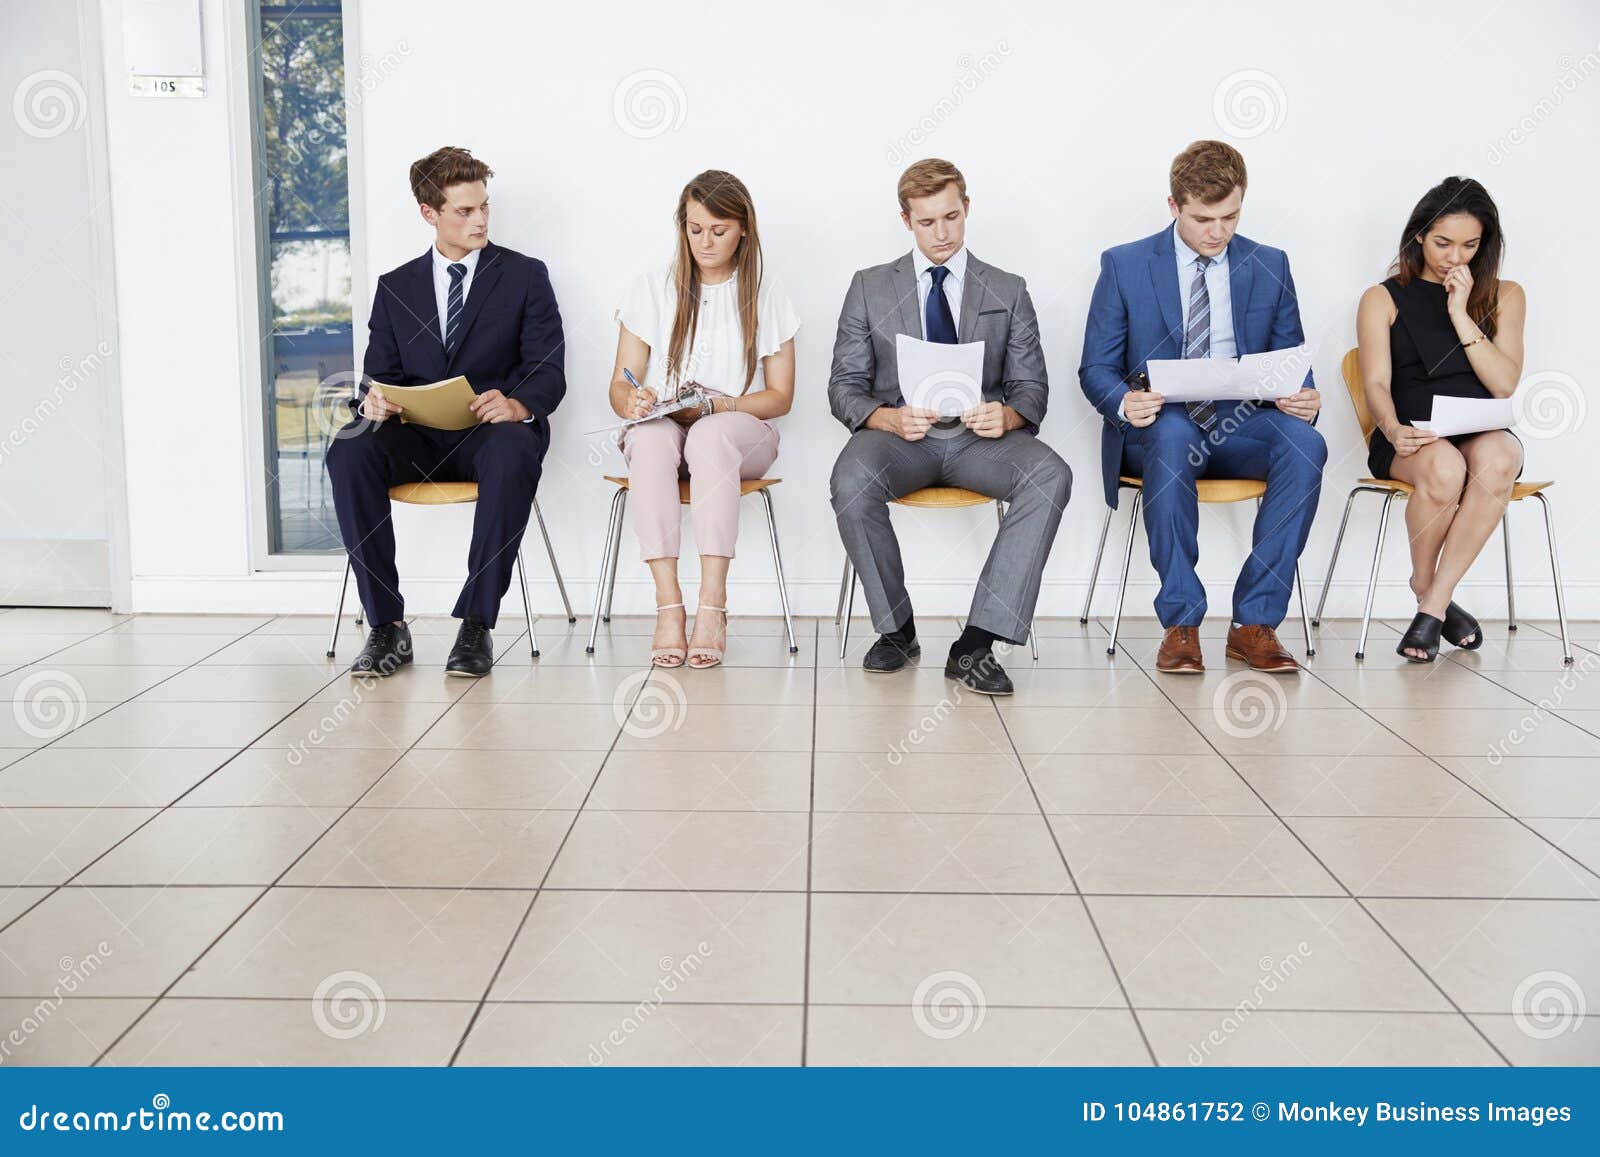 length of job interviews